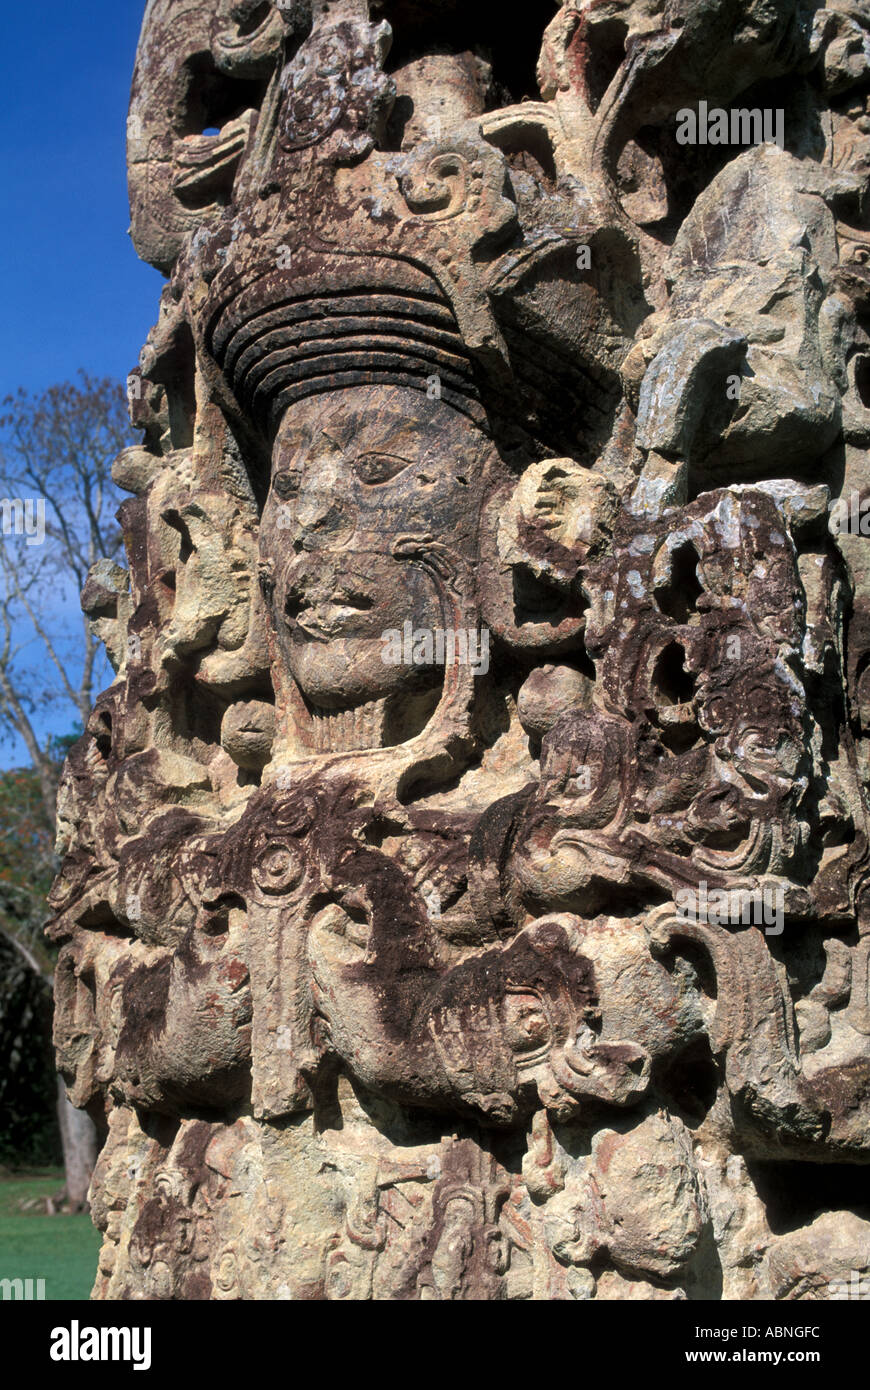 Honduras Copan Ruinas Stela B Porträt der Herrscher 18 Kaninchen vertikale Religion Mittelamerika Maya Ruinen Skulptur Maya-Kunst Stockfoto